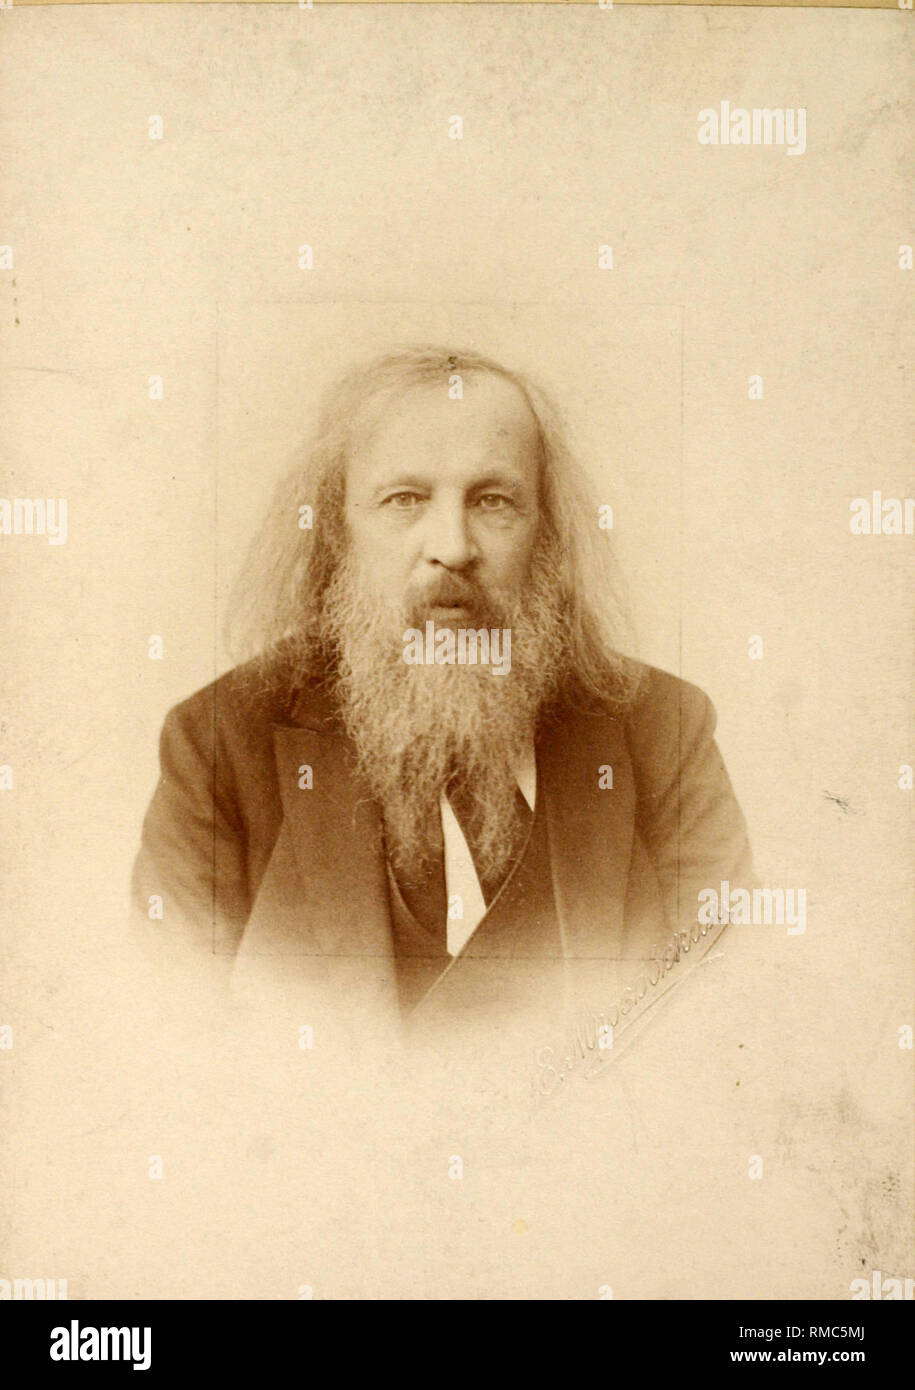 Portrait of the chemist Dmitri Mendeleev (1834-1907). Albumin Photo Stock Photo